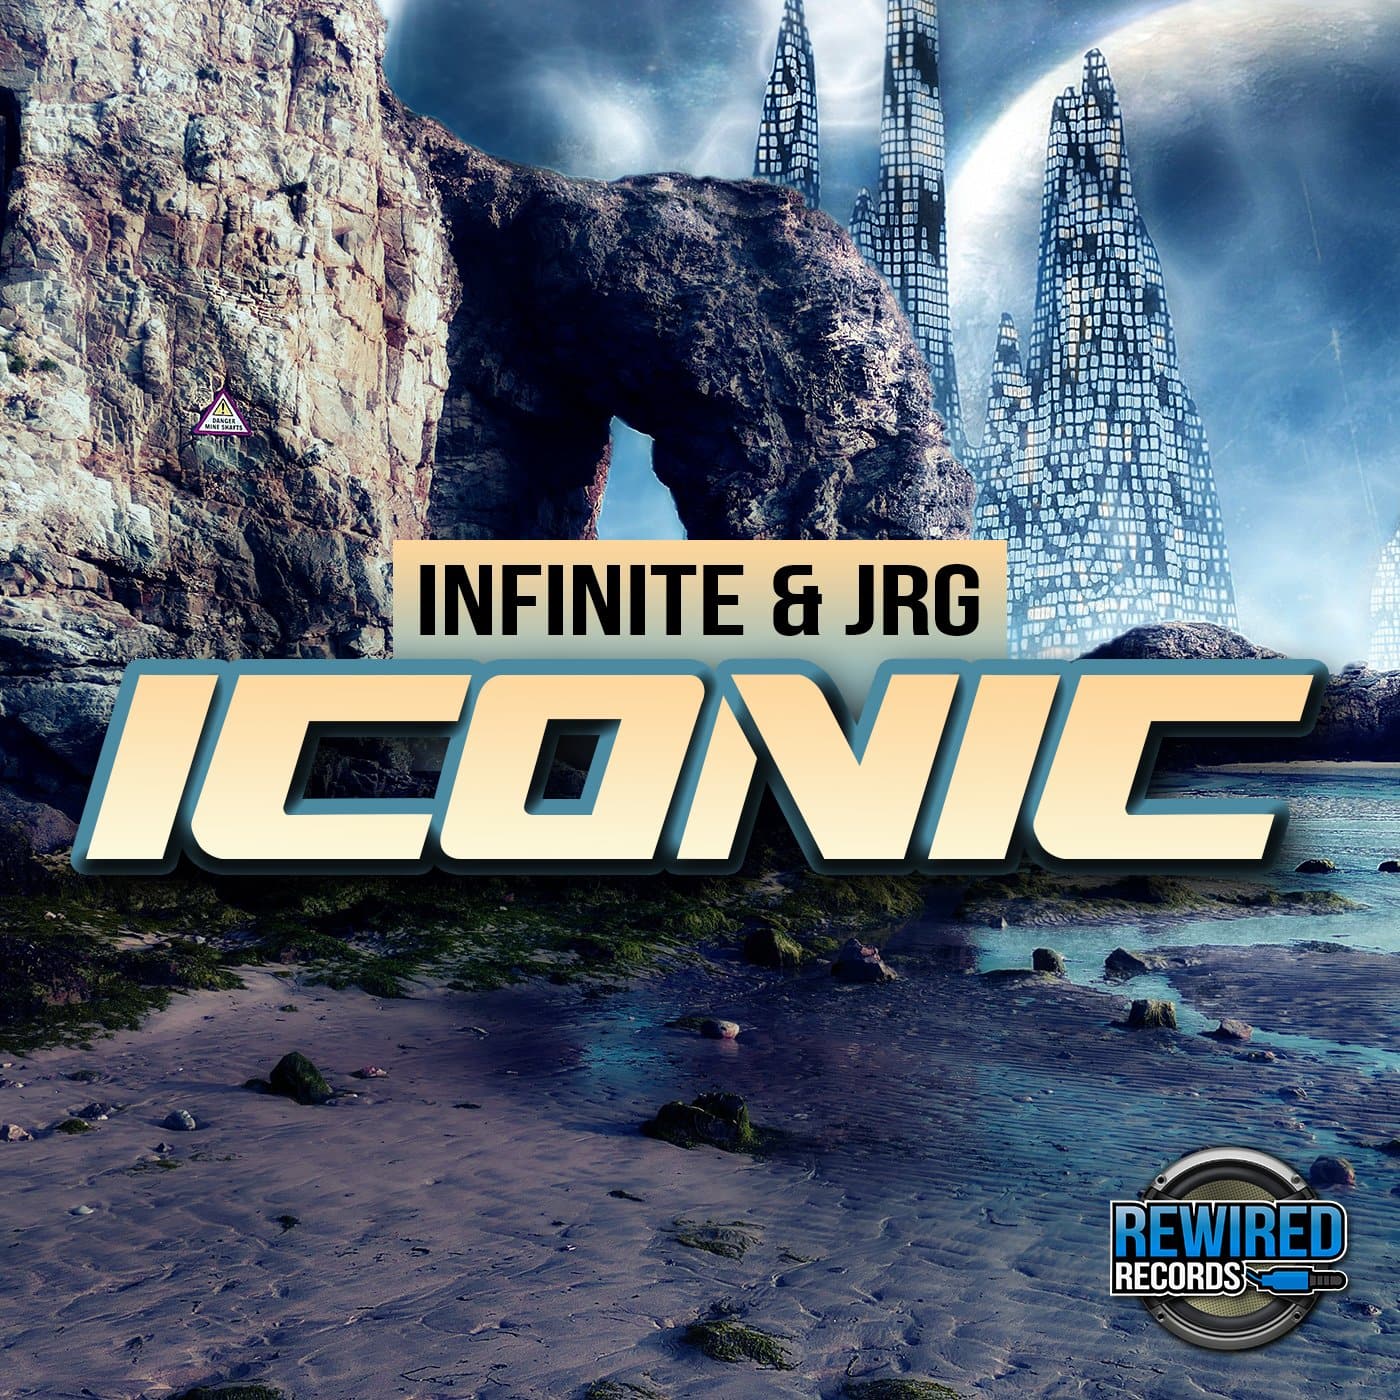 Infinite & JRG - Iconic - Rewired Records